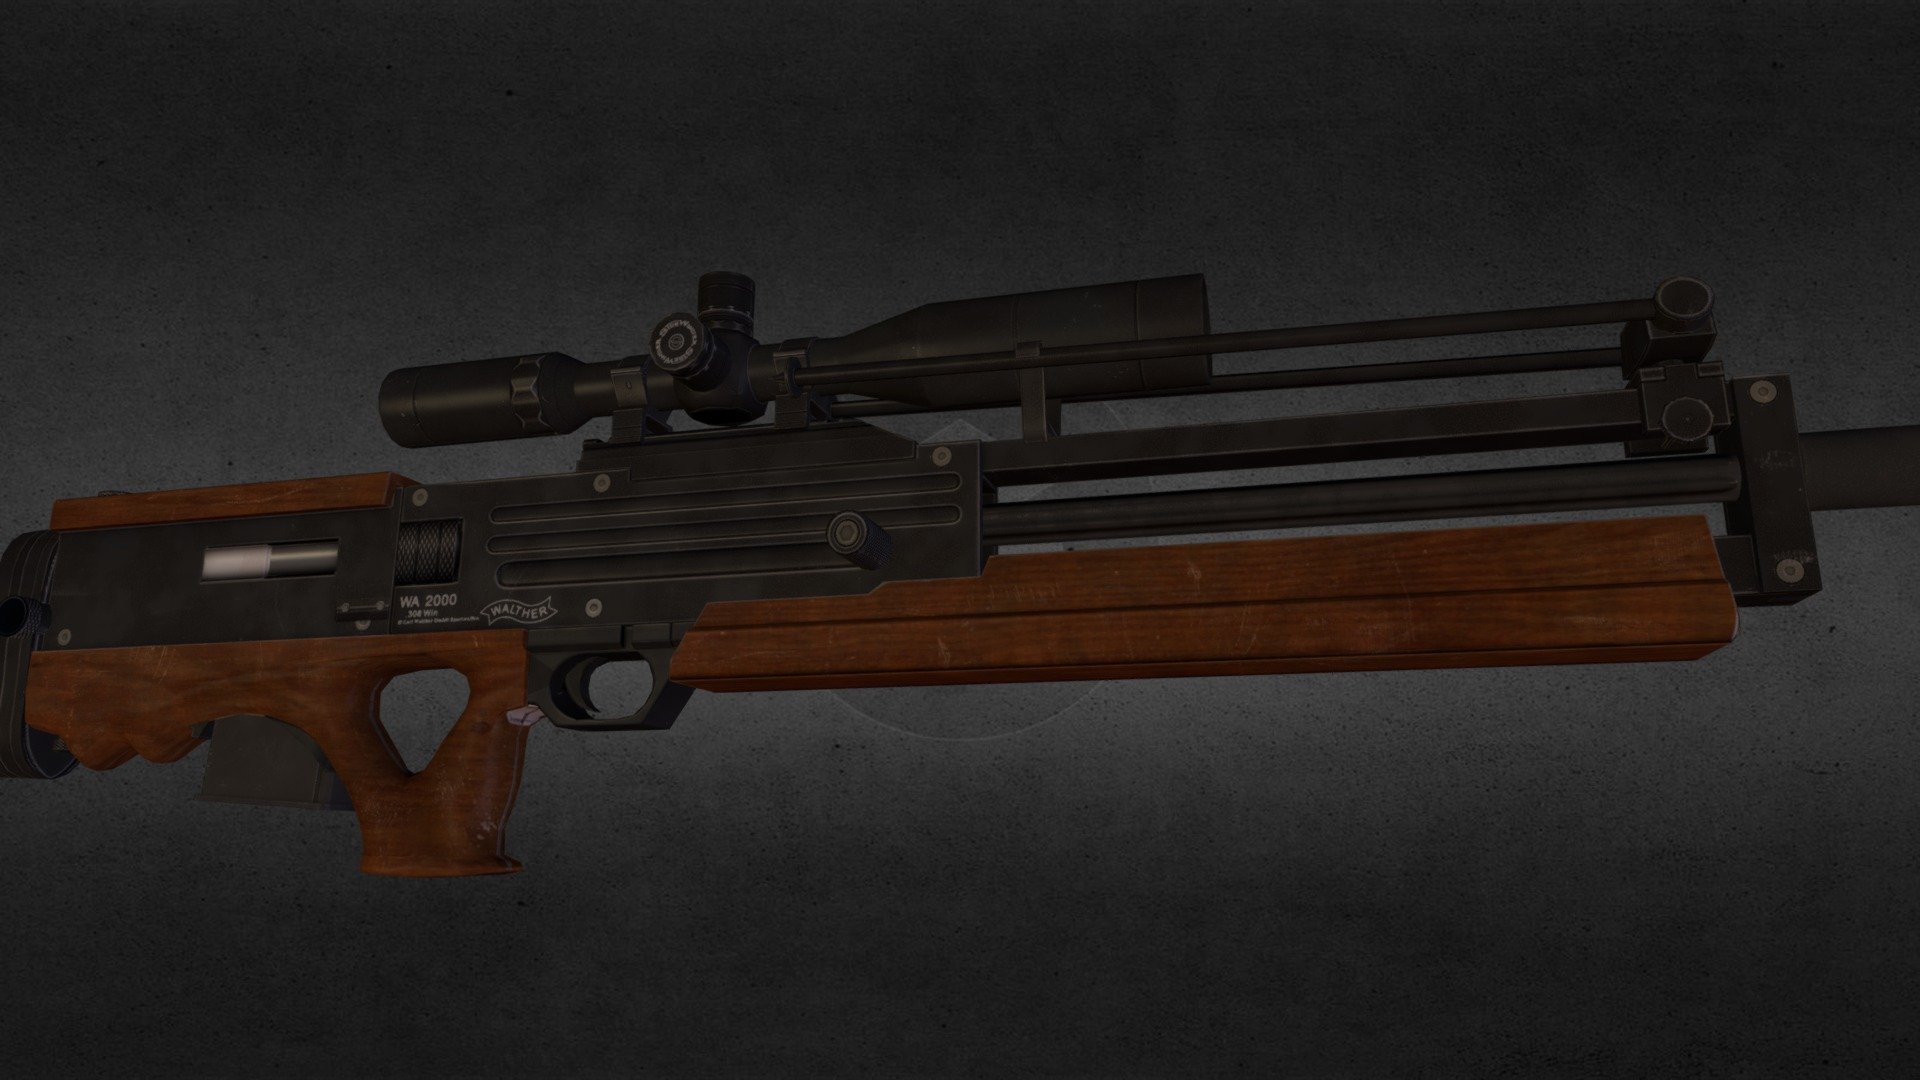 Walther Wa 00 Sniper Rifle 3d Model By Cg P Dostal Cg P Dostal Fsb1m90 Sketchfab